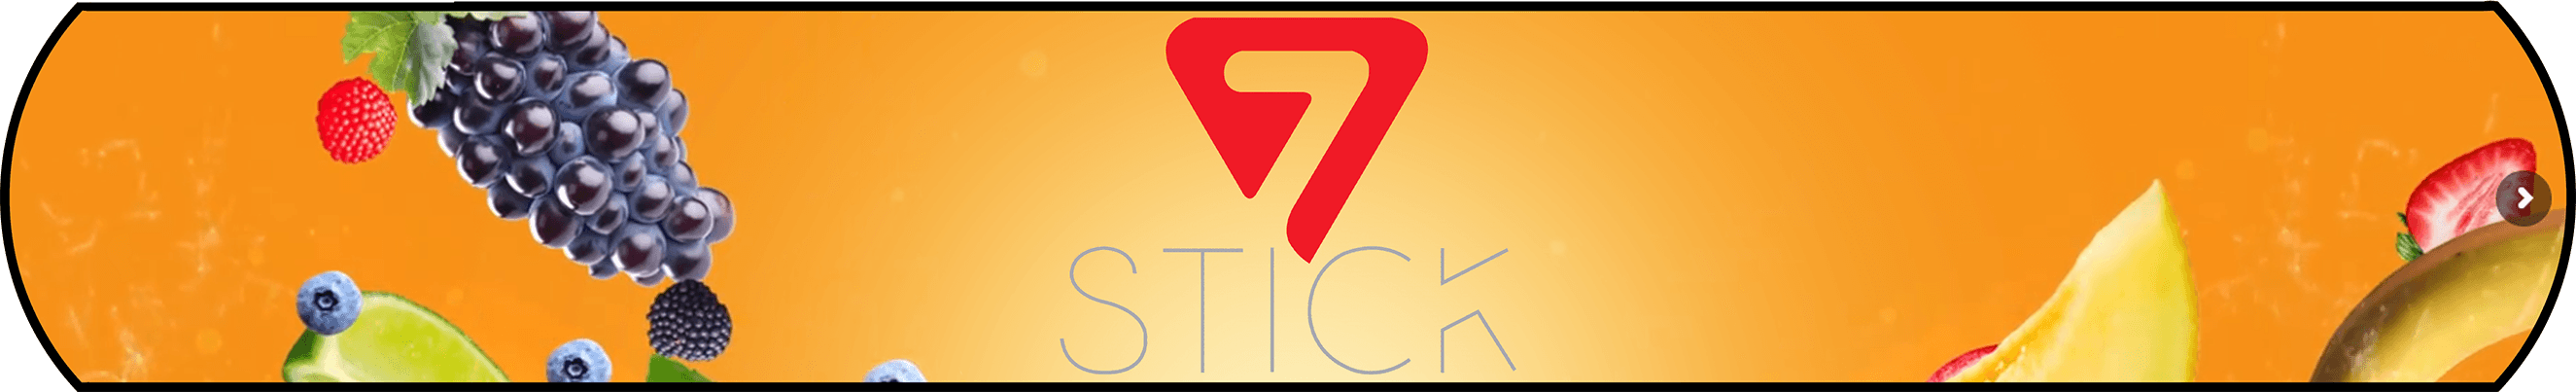 7 Stick MAIN Banner